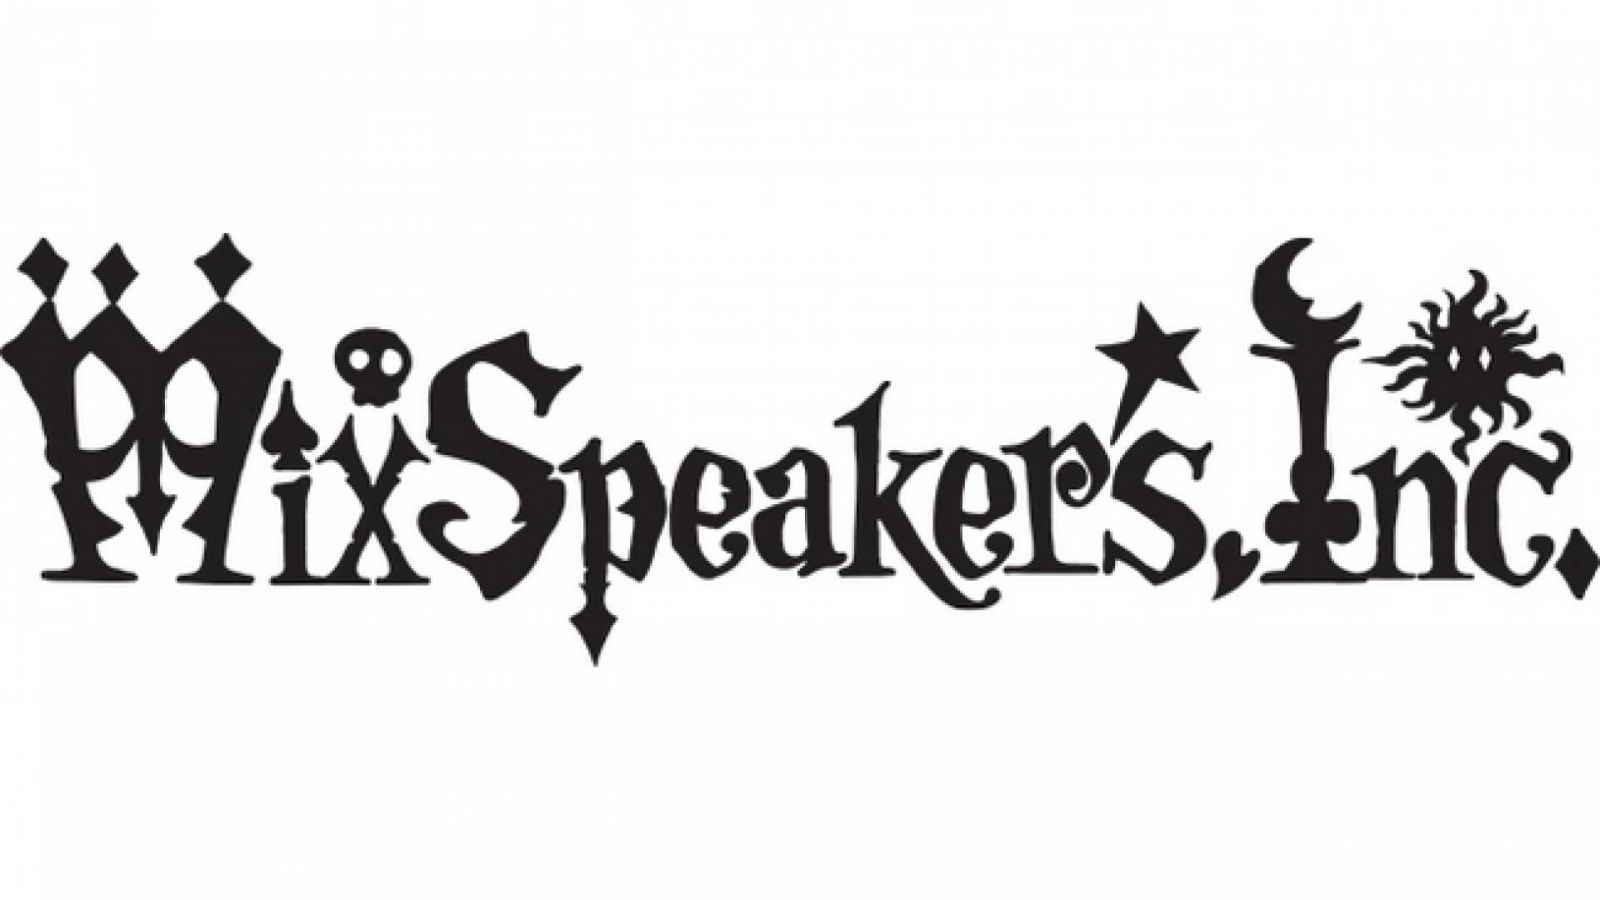 Новый участник Mix Speaker's, Inc. © Mix Speaker's, Inc.